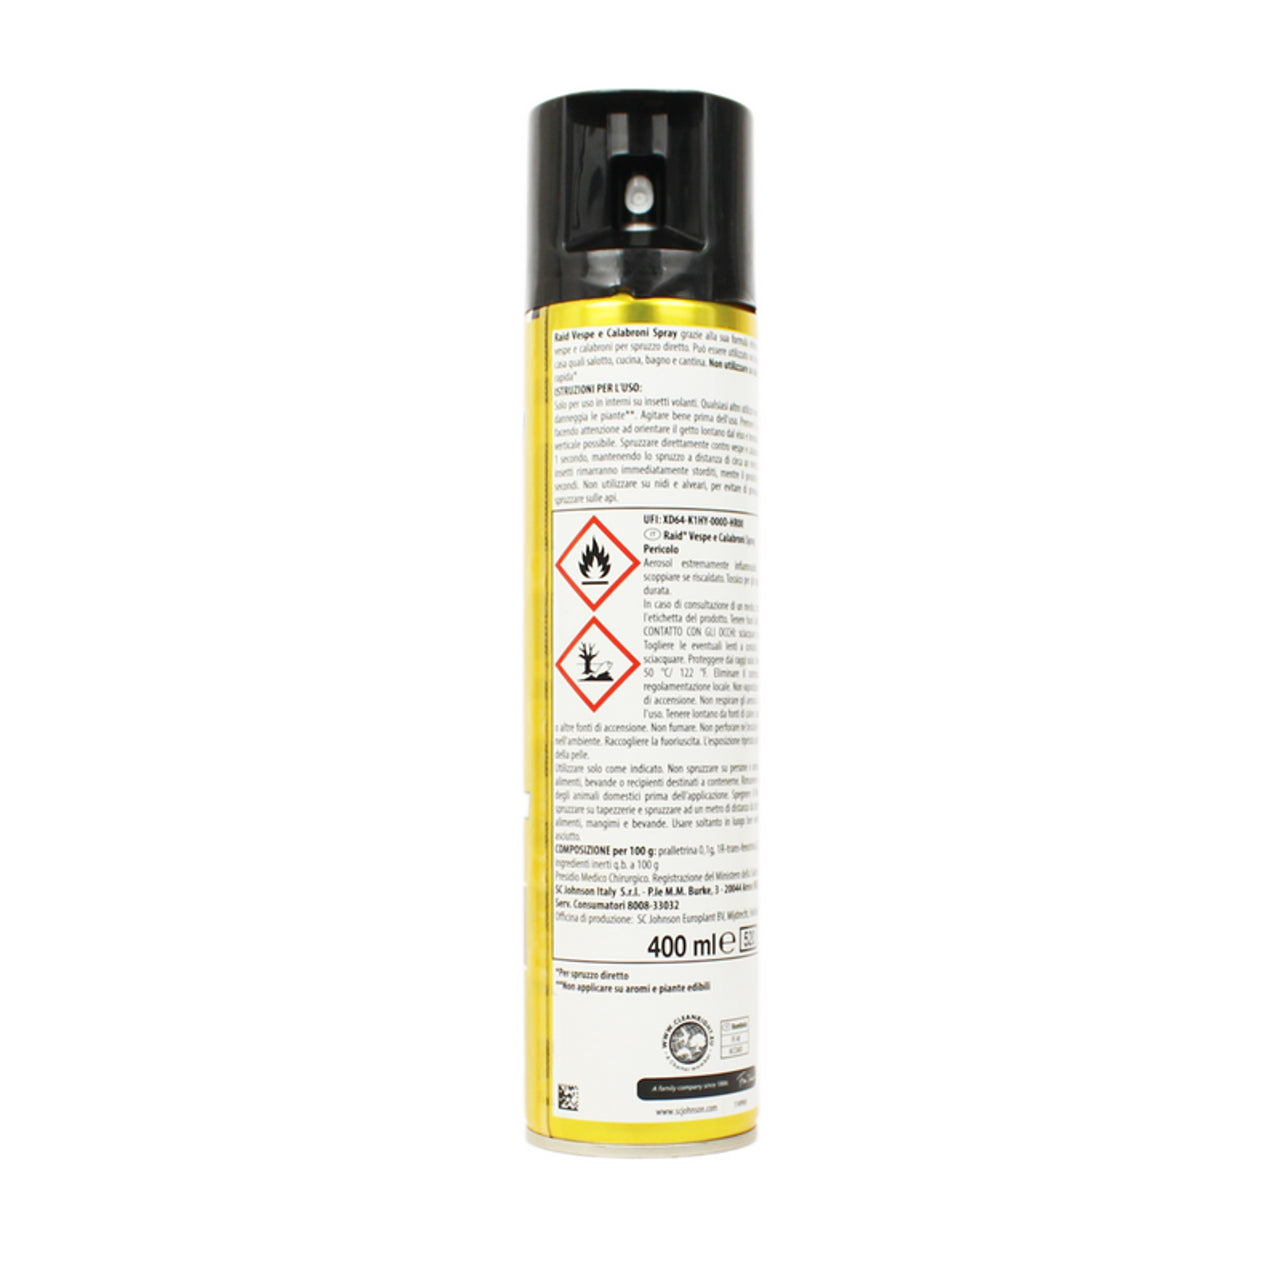 Raid Insecticide Vespe in Calabroni Spray 400 ml